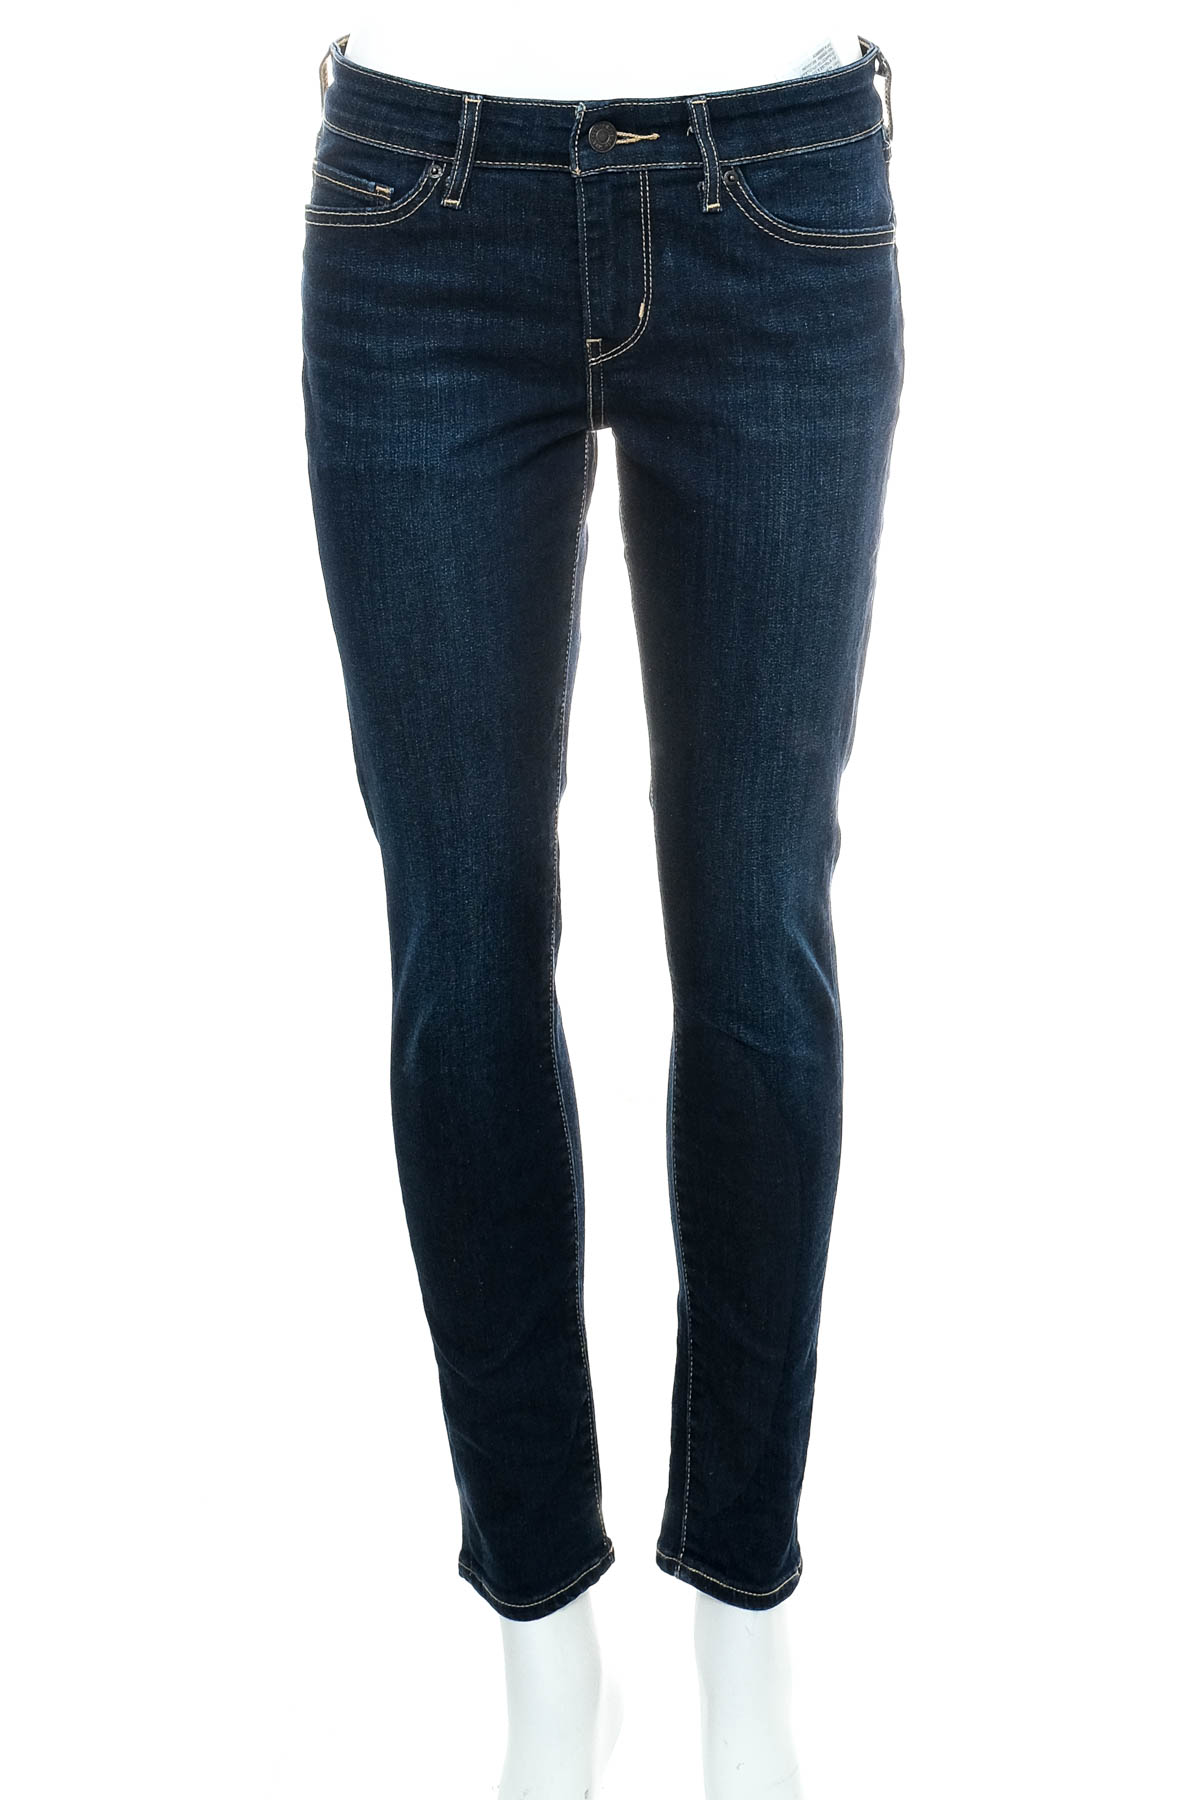 Women's jeans - Levi Strauss & Co. - 0